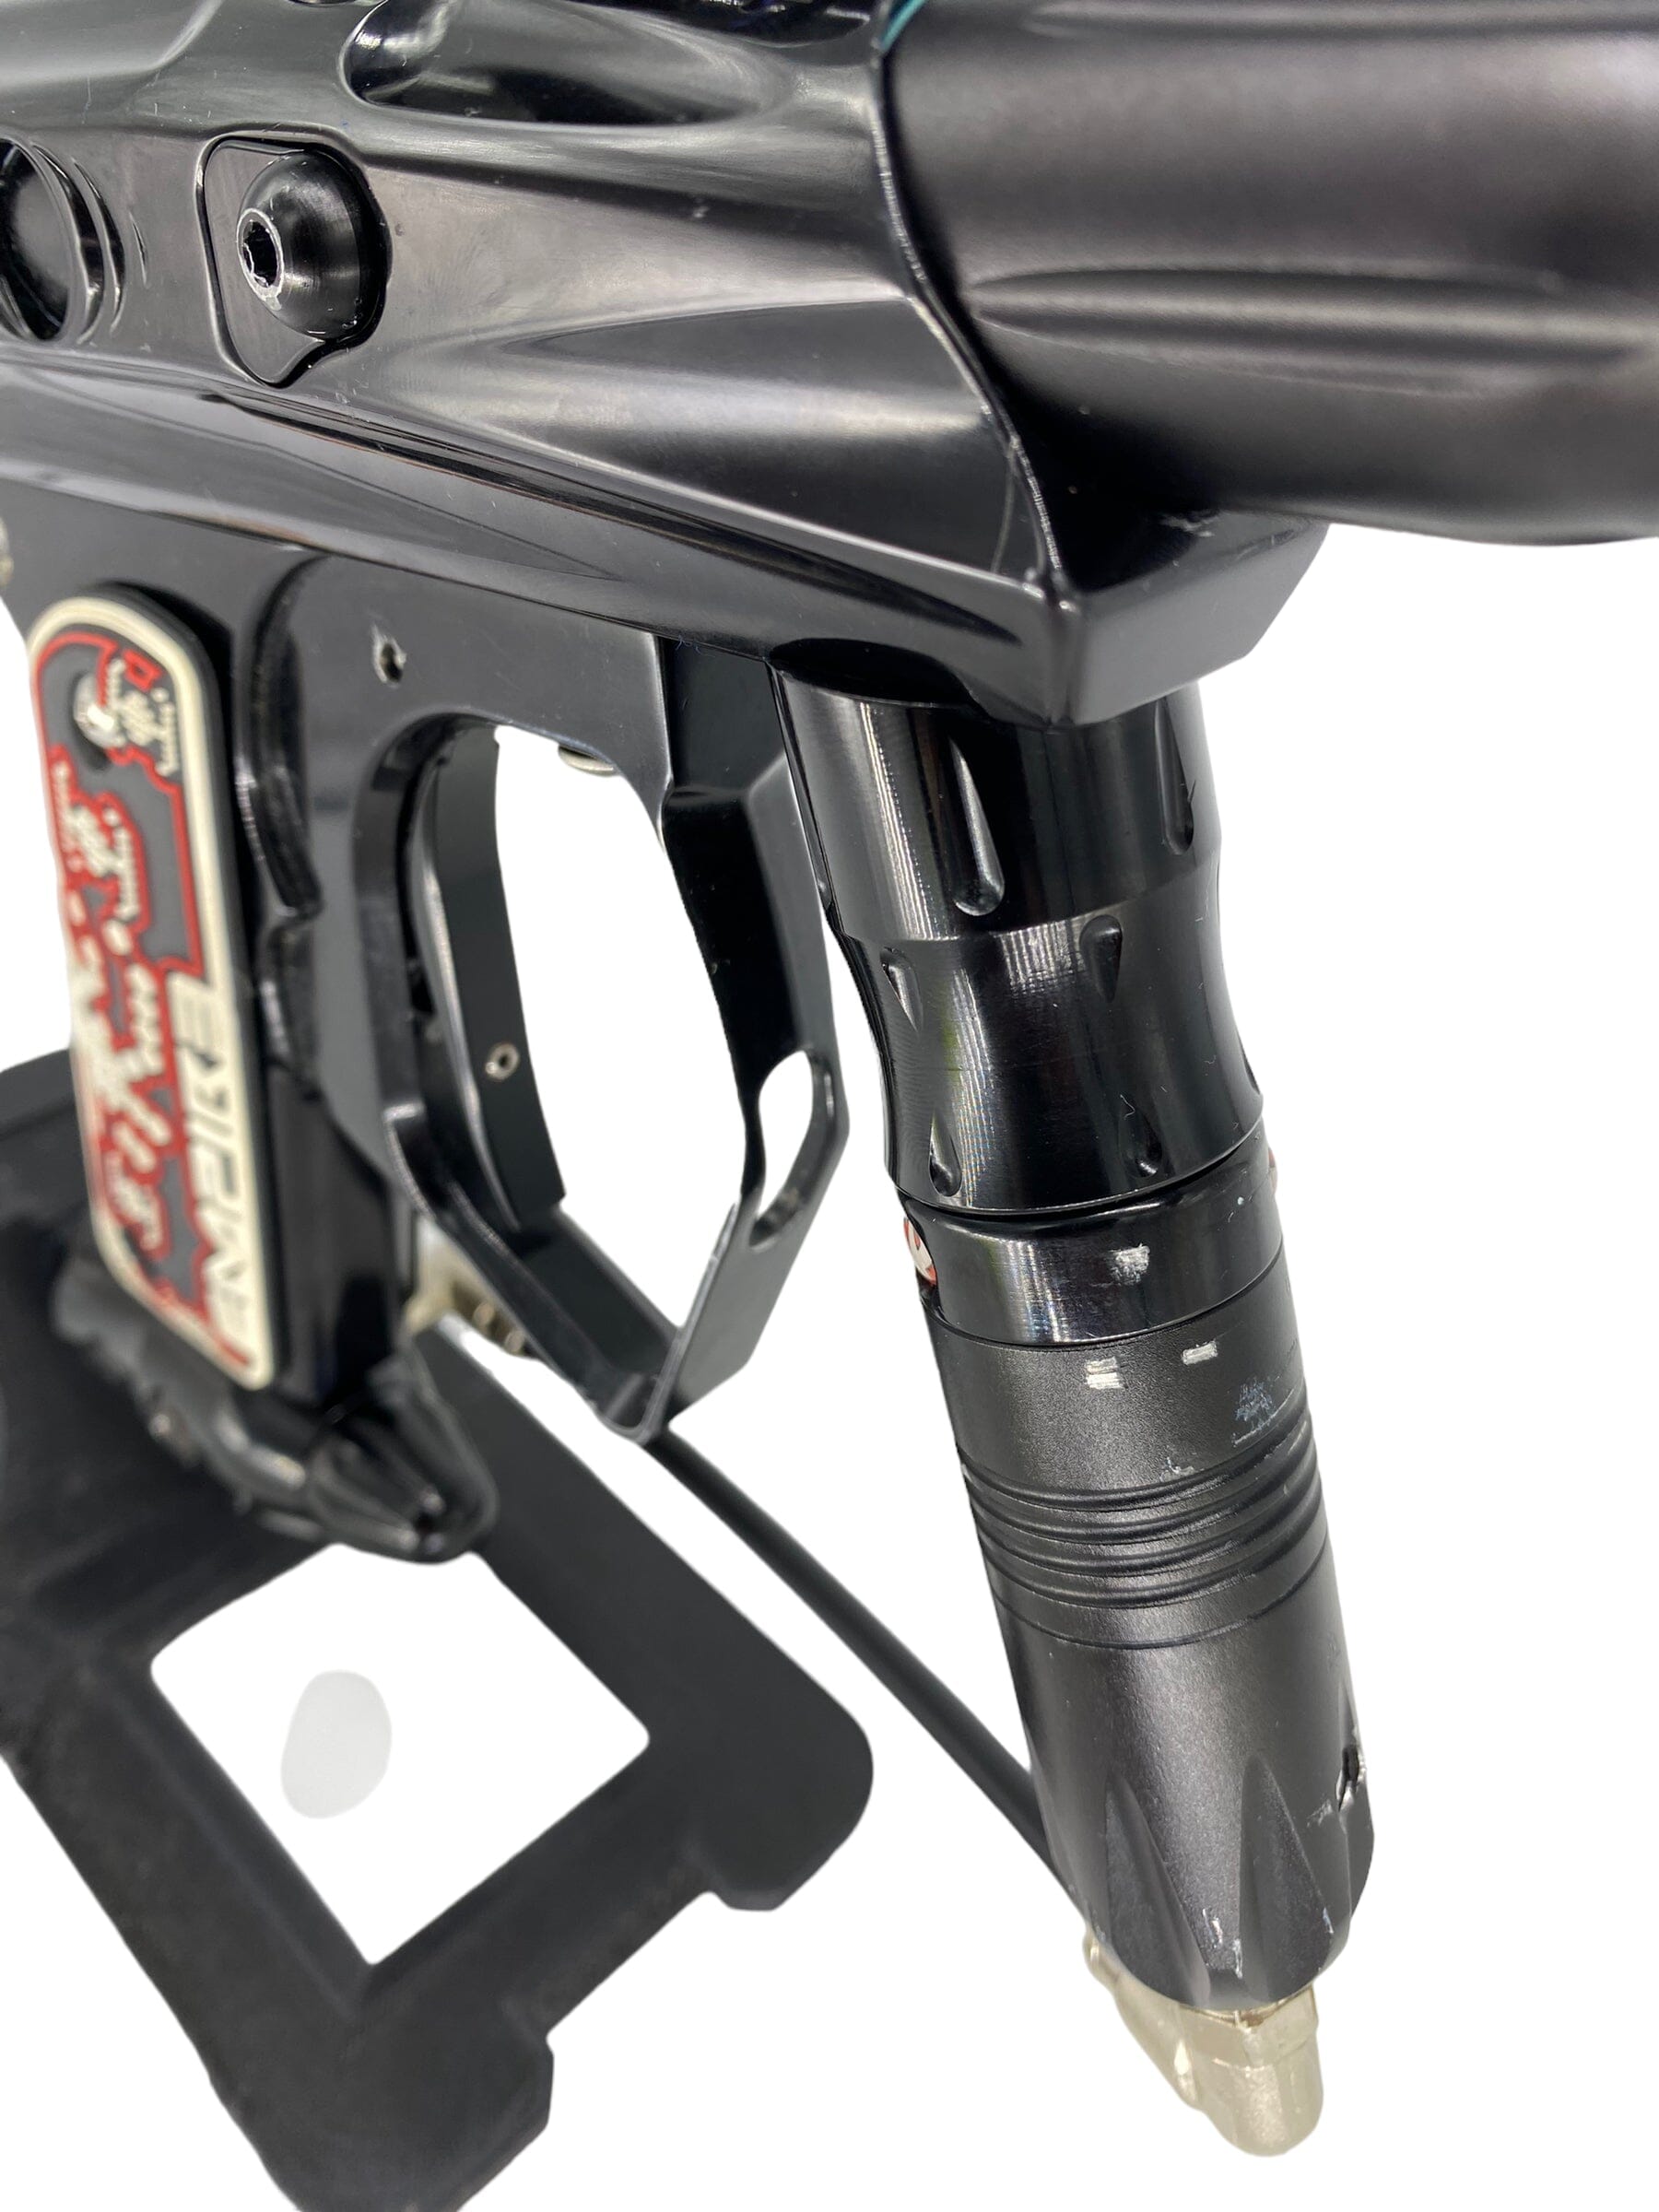 Used Sp Shocker Dark SFT Upgraded Paintball Gun from CPXBrosPaintball Buy/Sell/Trade Paintball Markers, Paintball Hoppers, Paintball Masks, and Hormesis Headbands